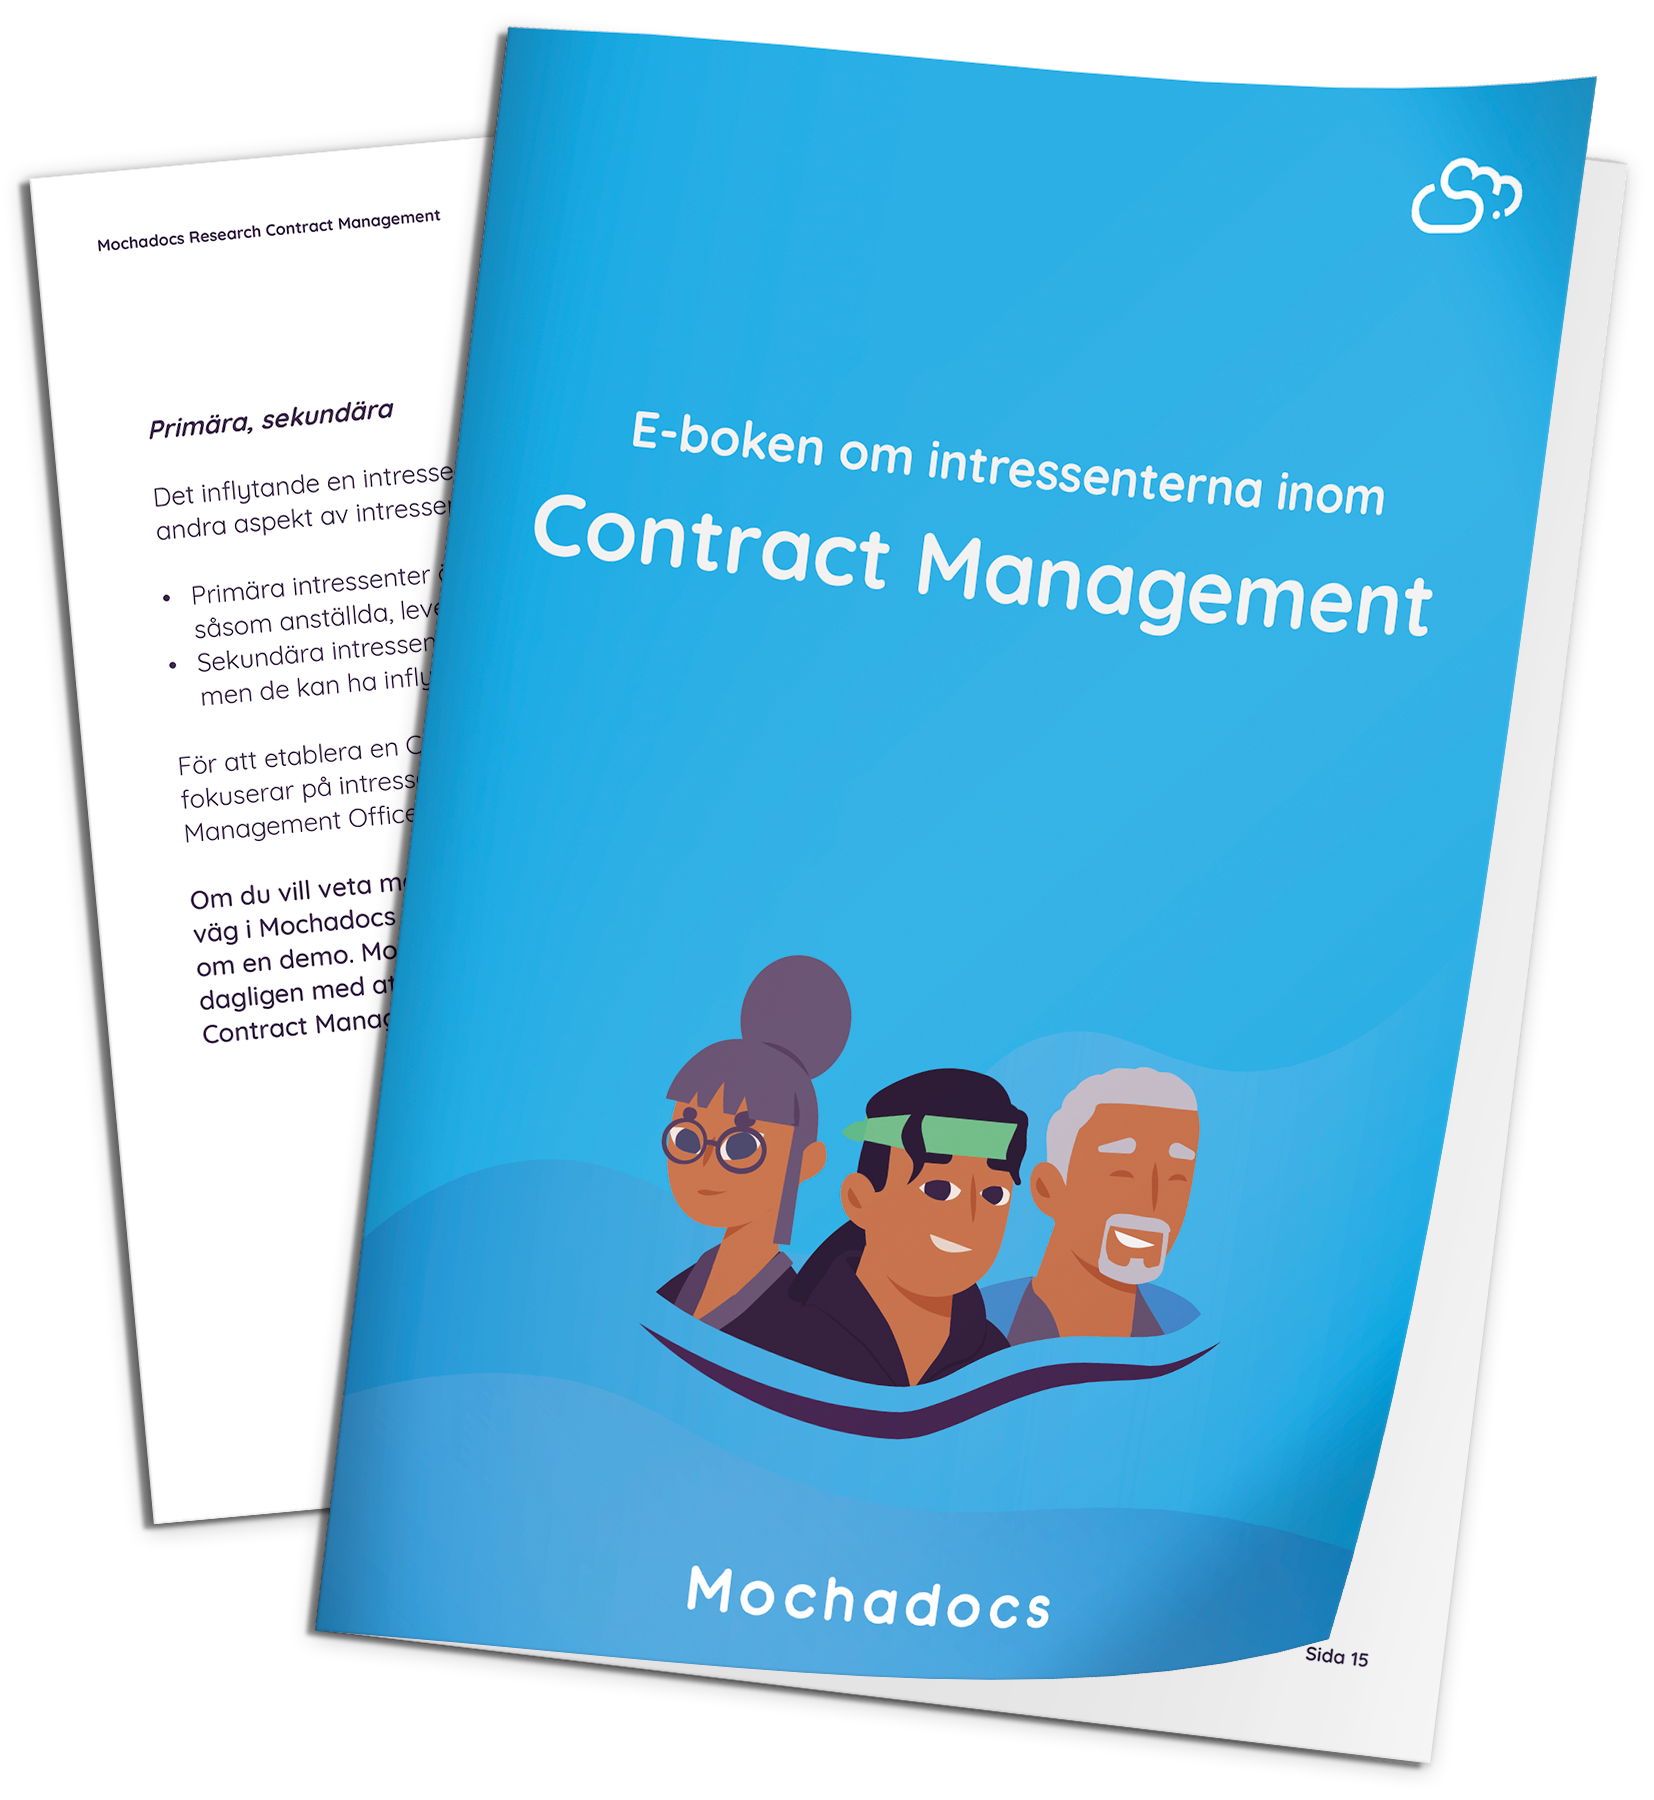 Mochadocs - Contract Management - eBøk - E-boken om intresentterna inom Contract Management